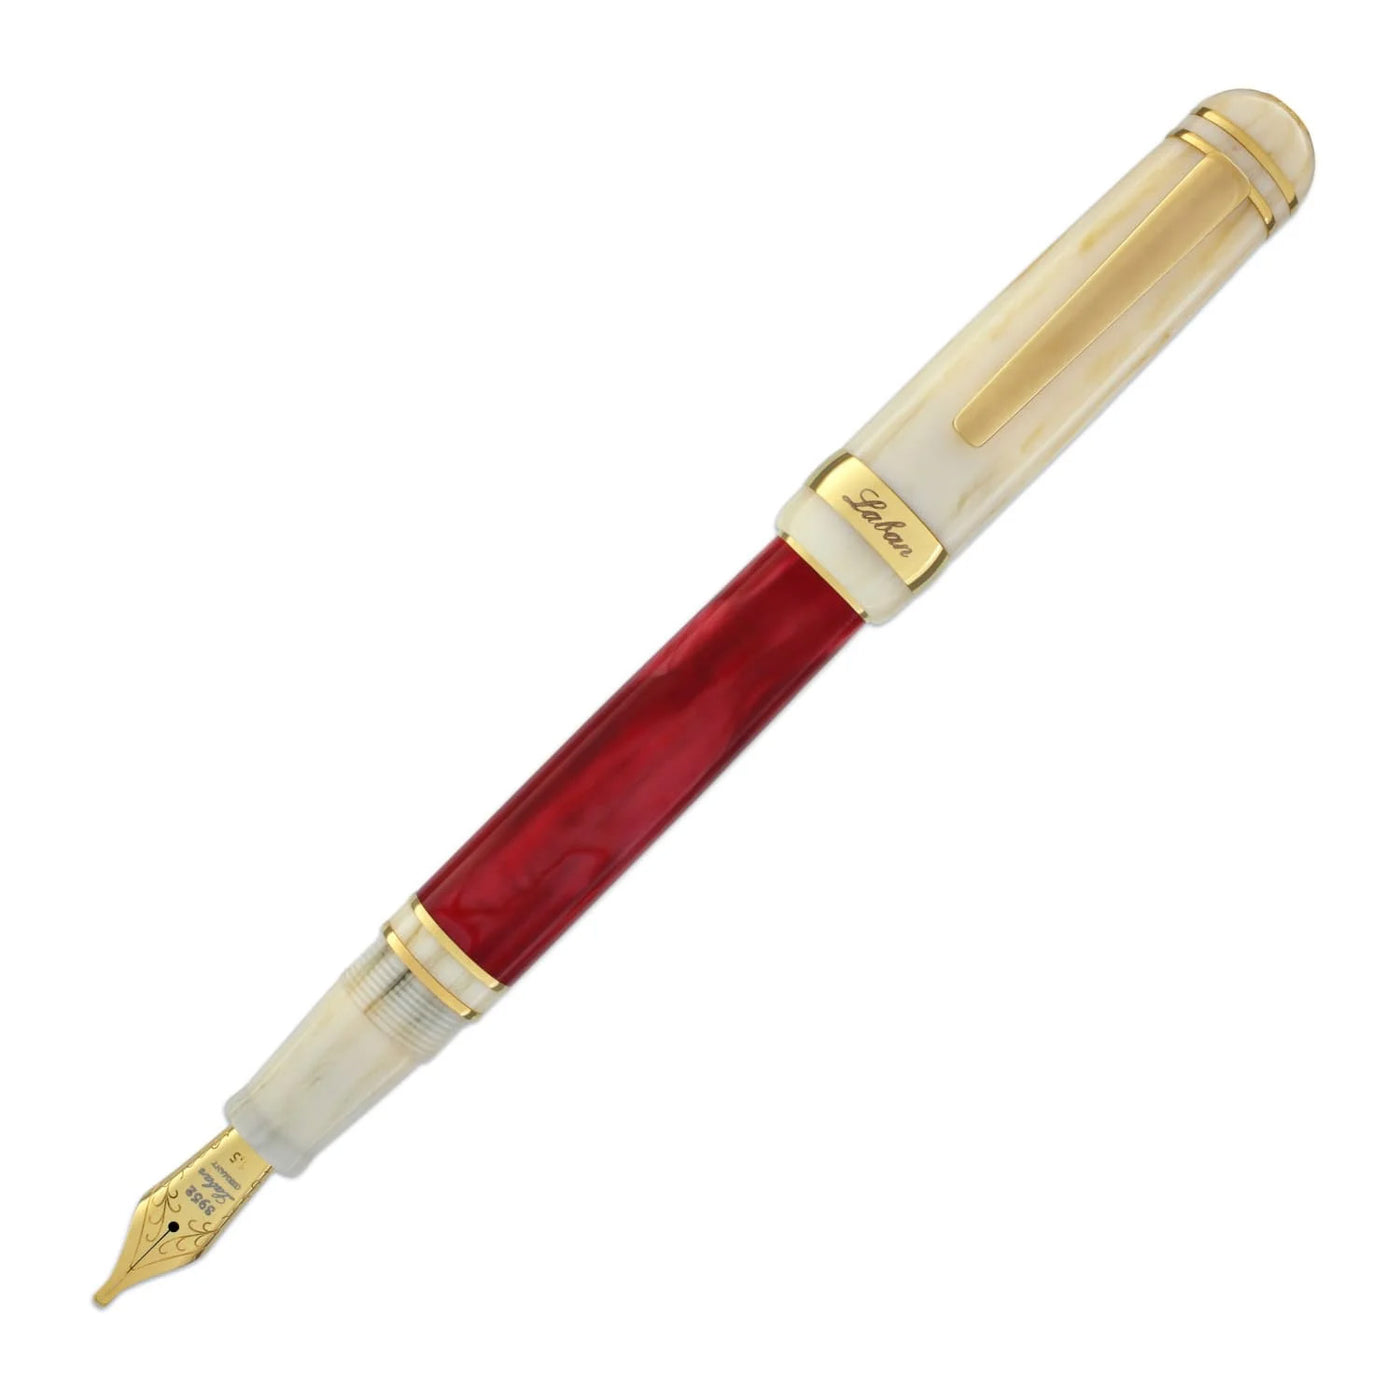 Laban 325 14K Gold Fountain Pen - Flame 1